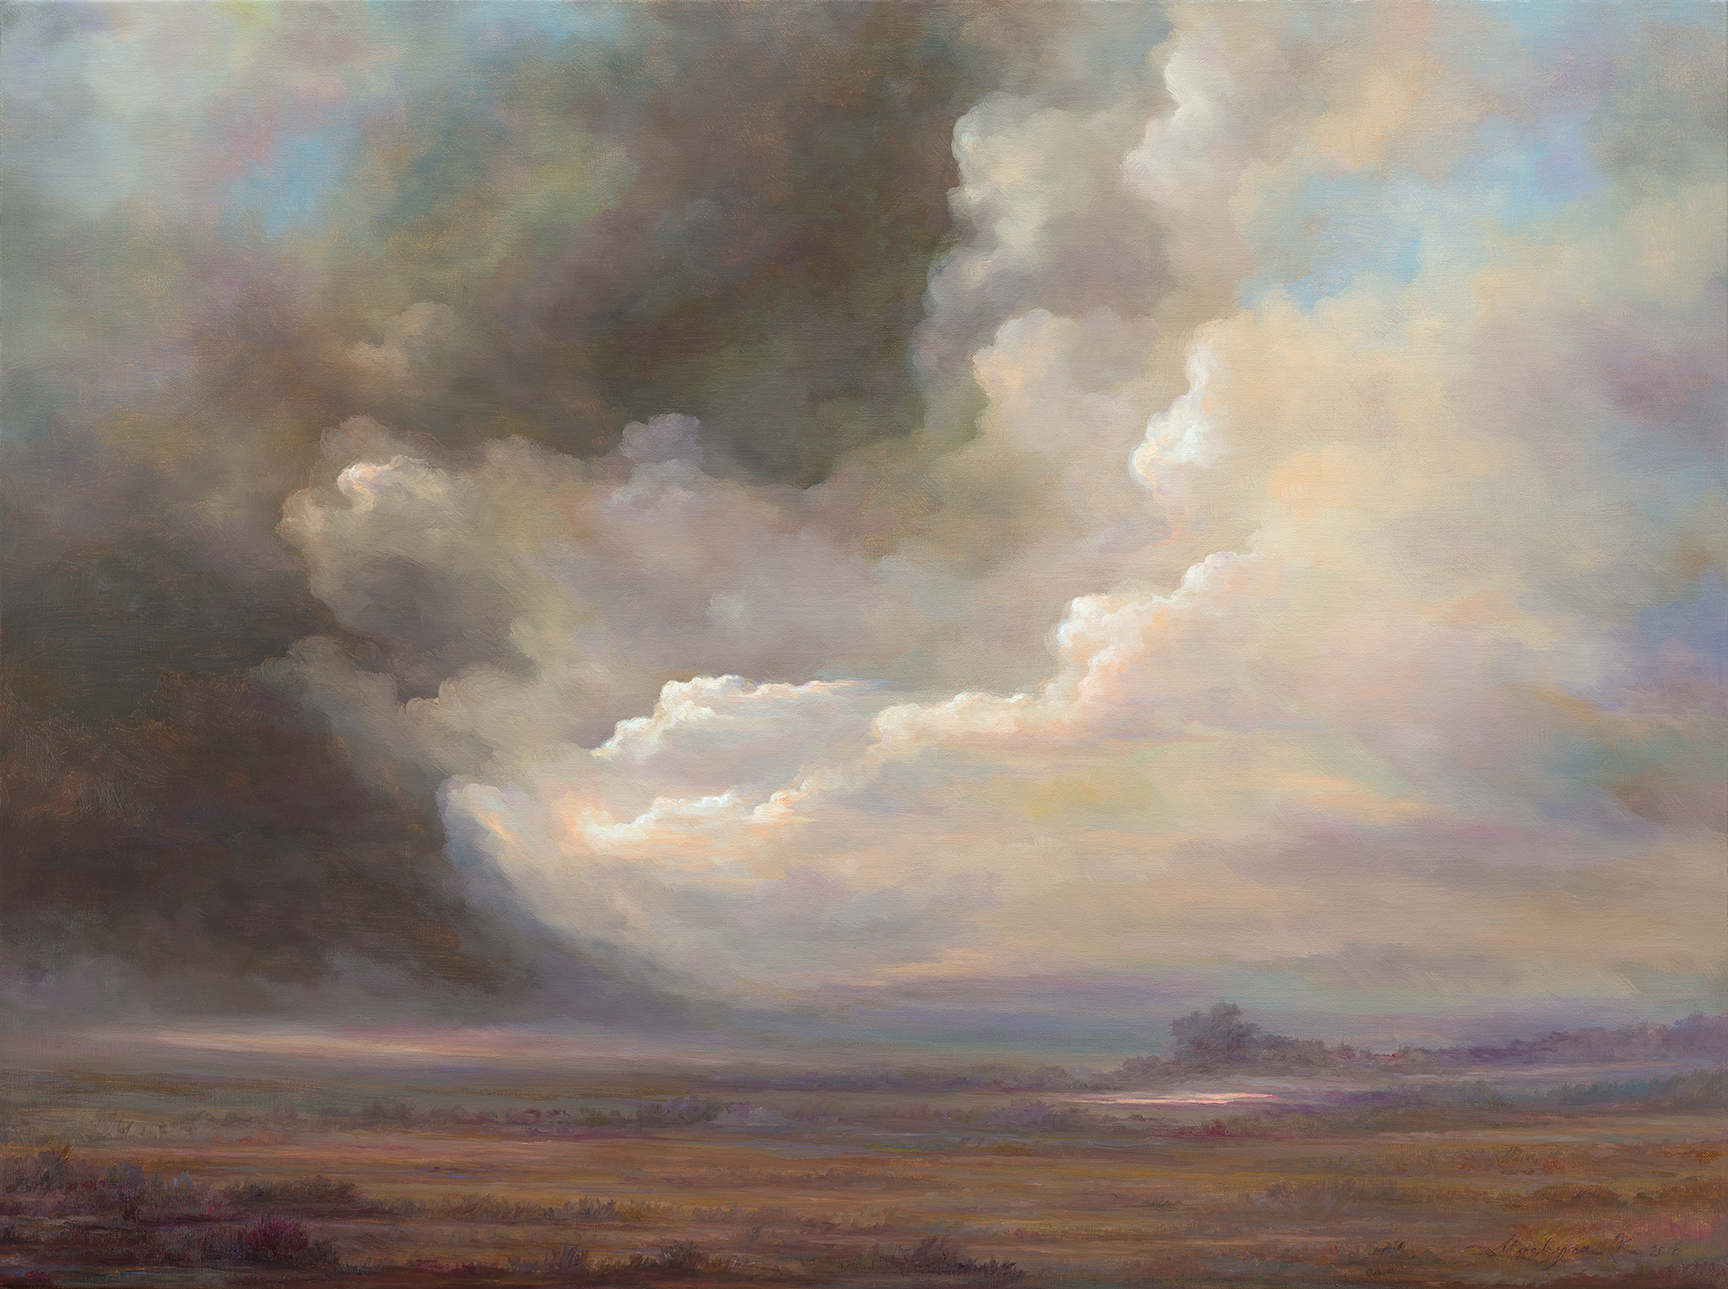 Approaching Storm over Savannah's Prairie